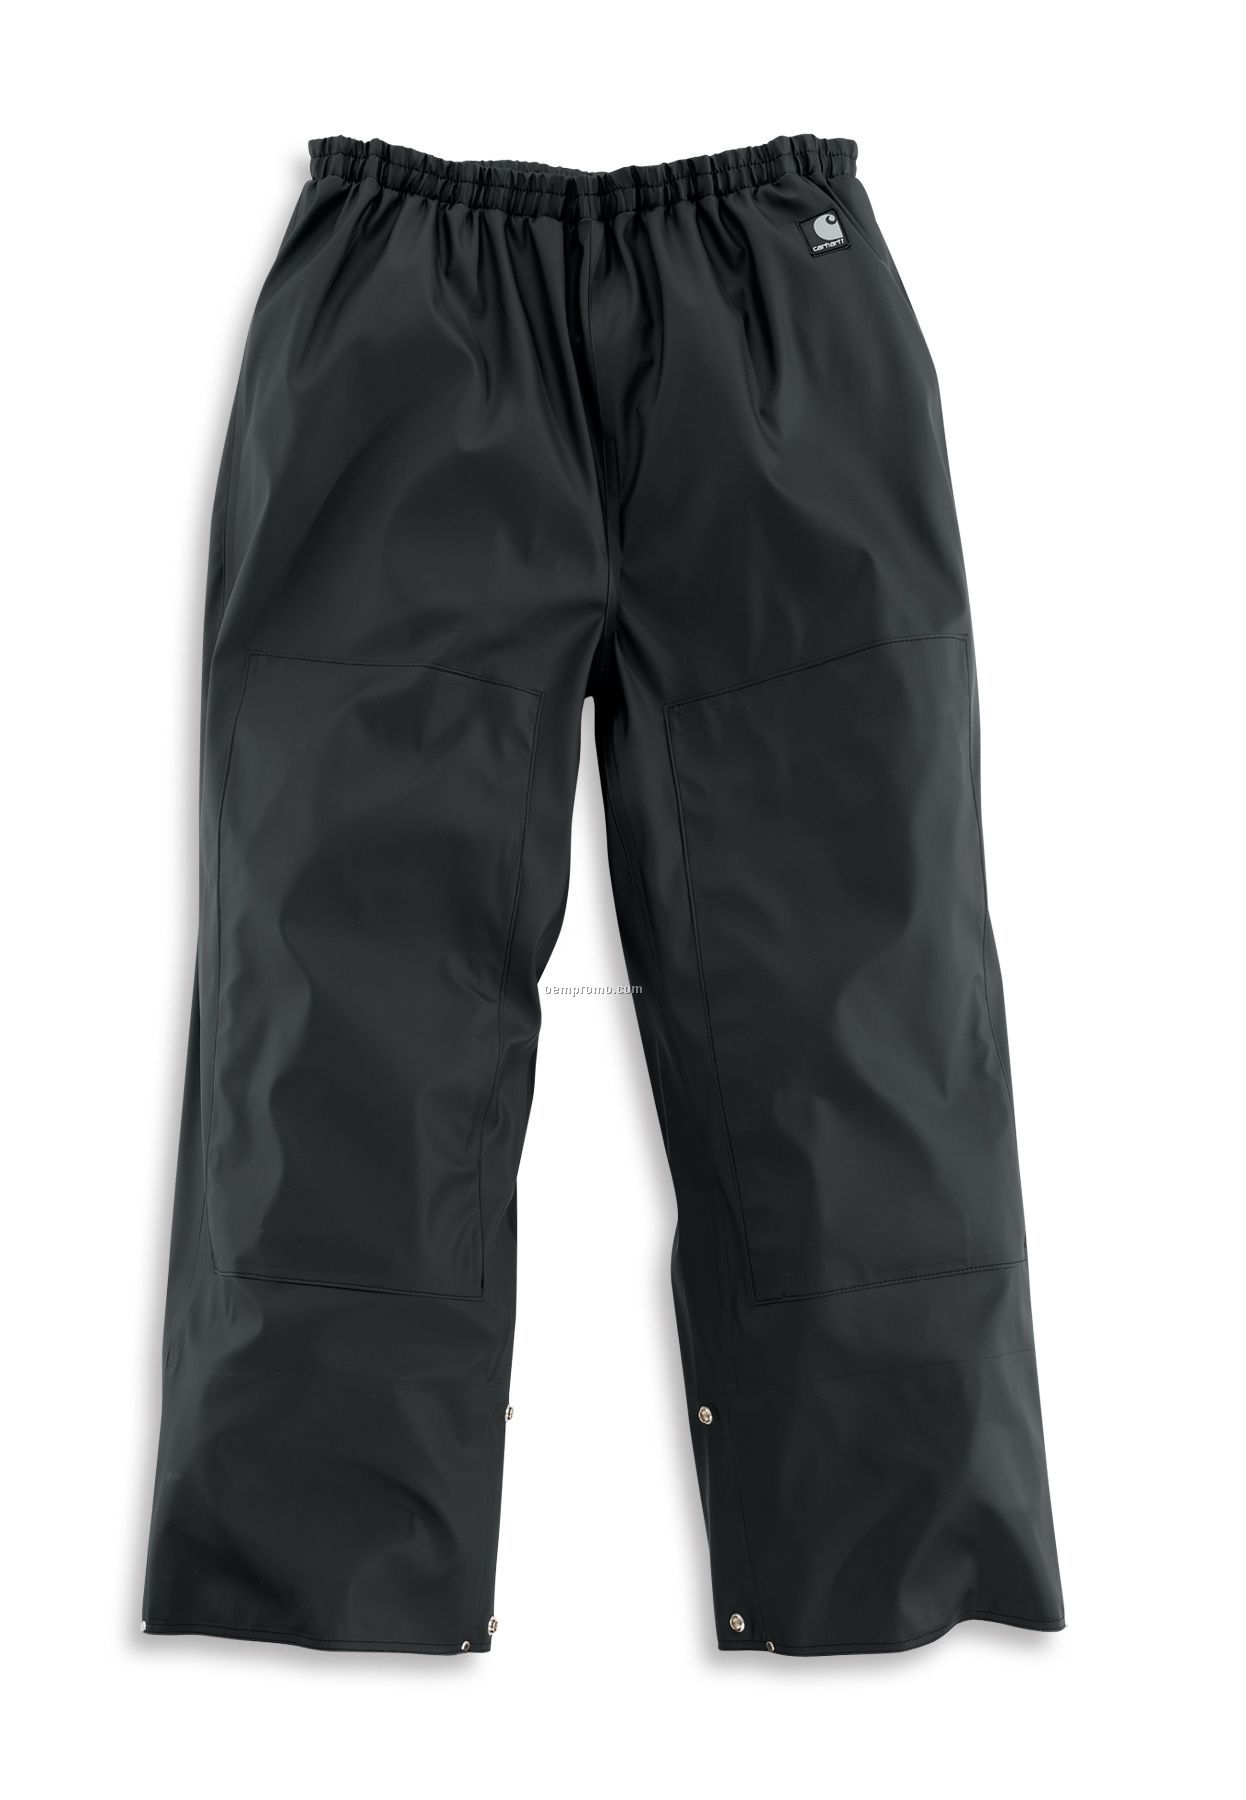 Carhartt Men's Workflex Waterproof Polyester Pants